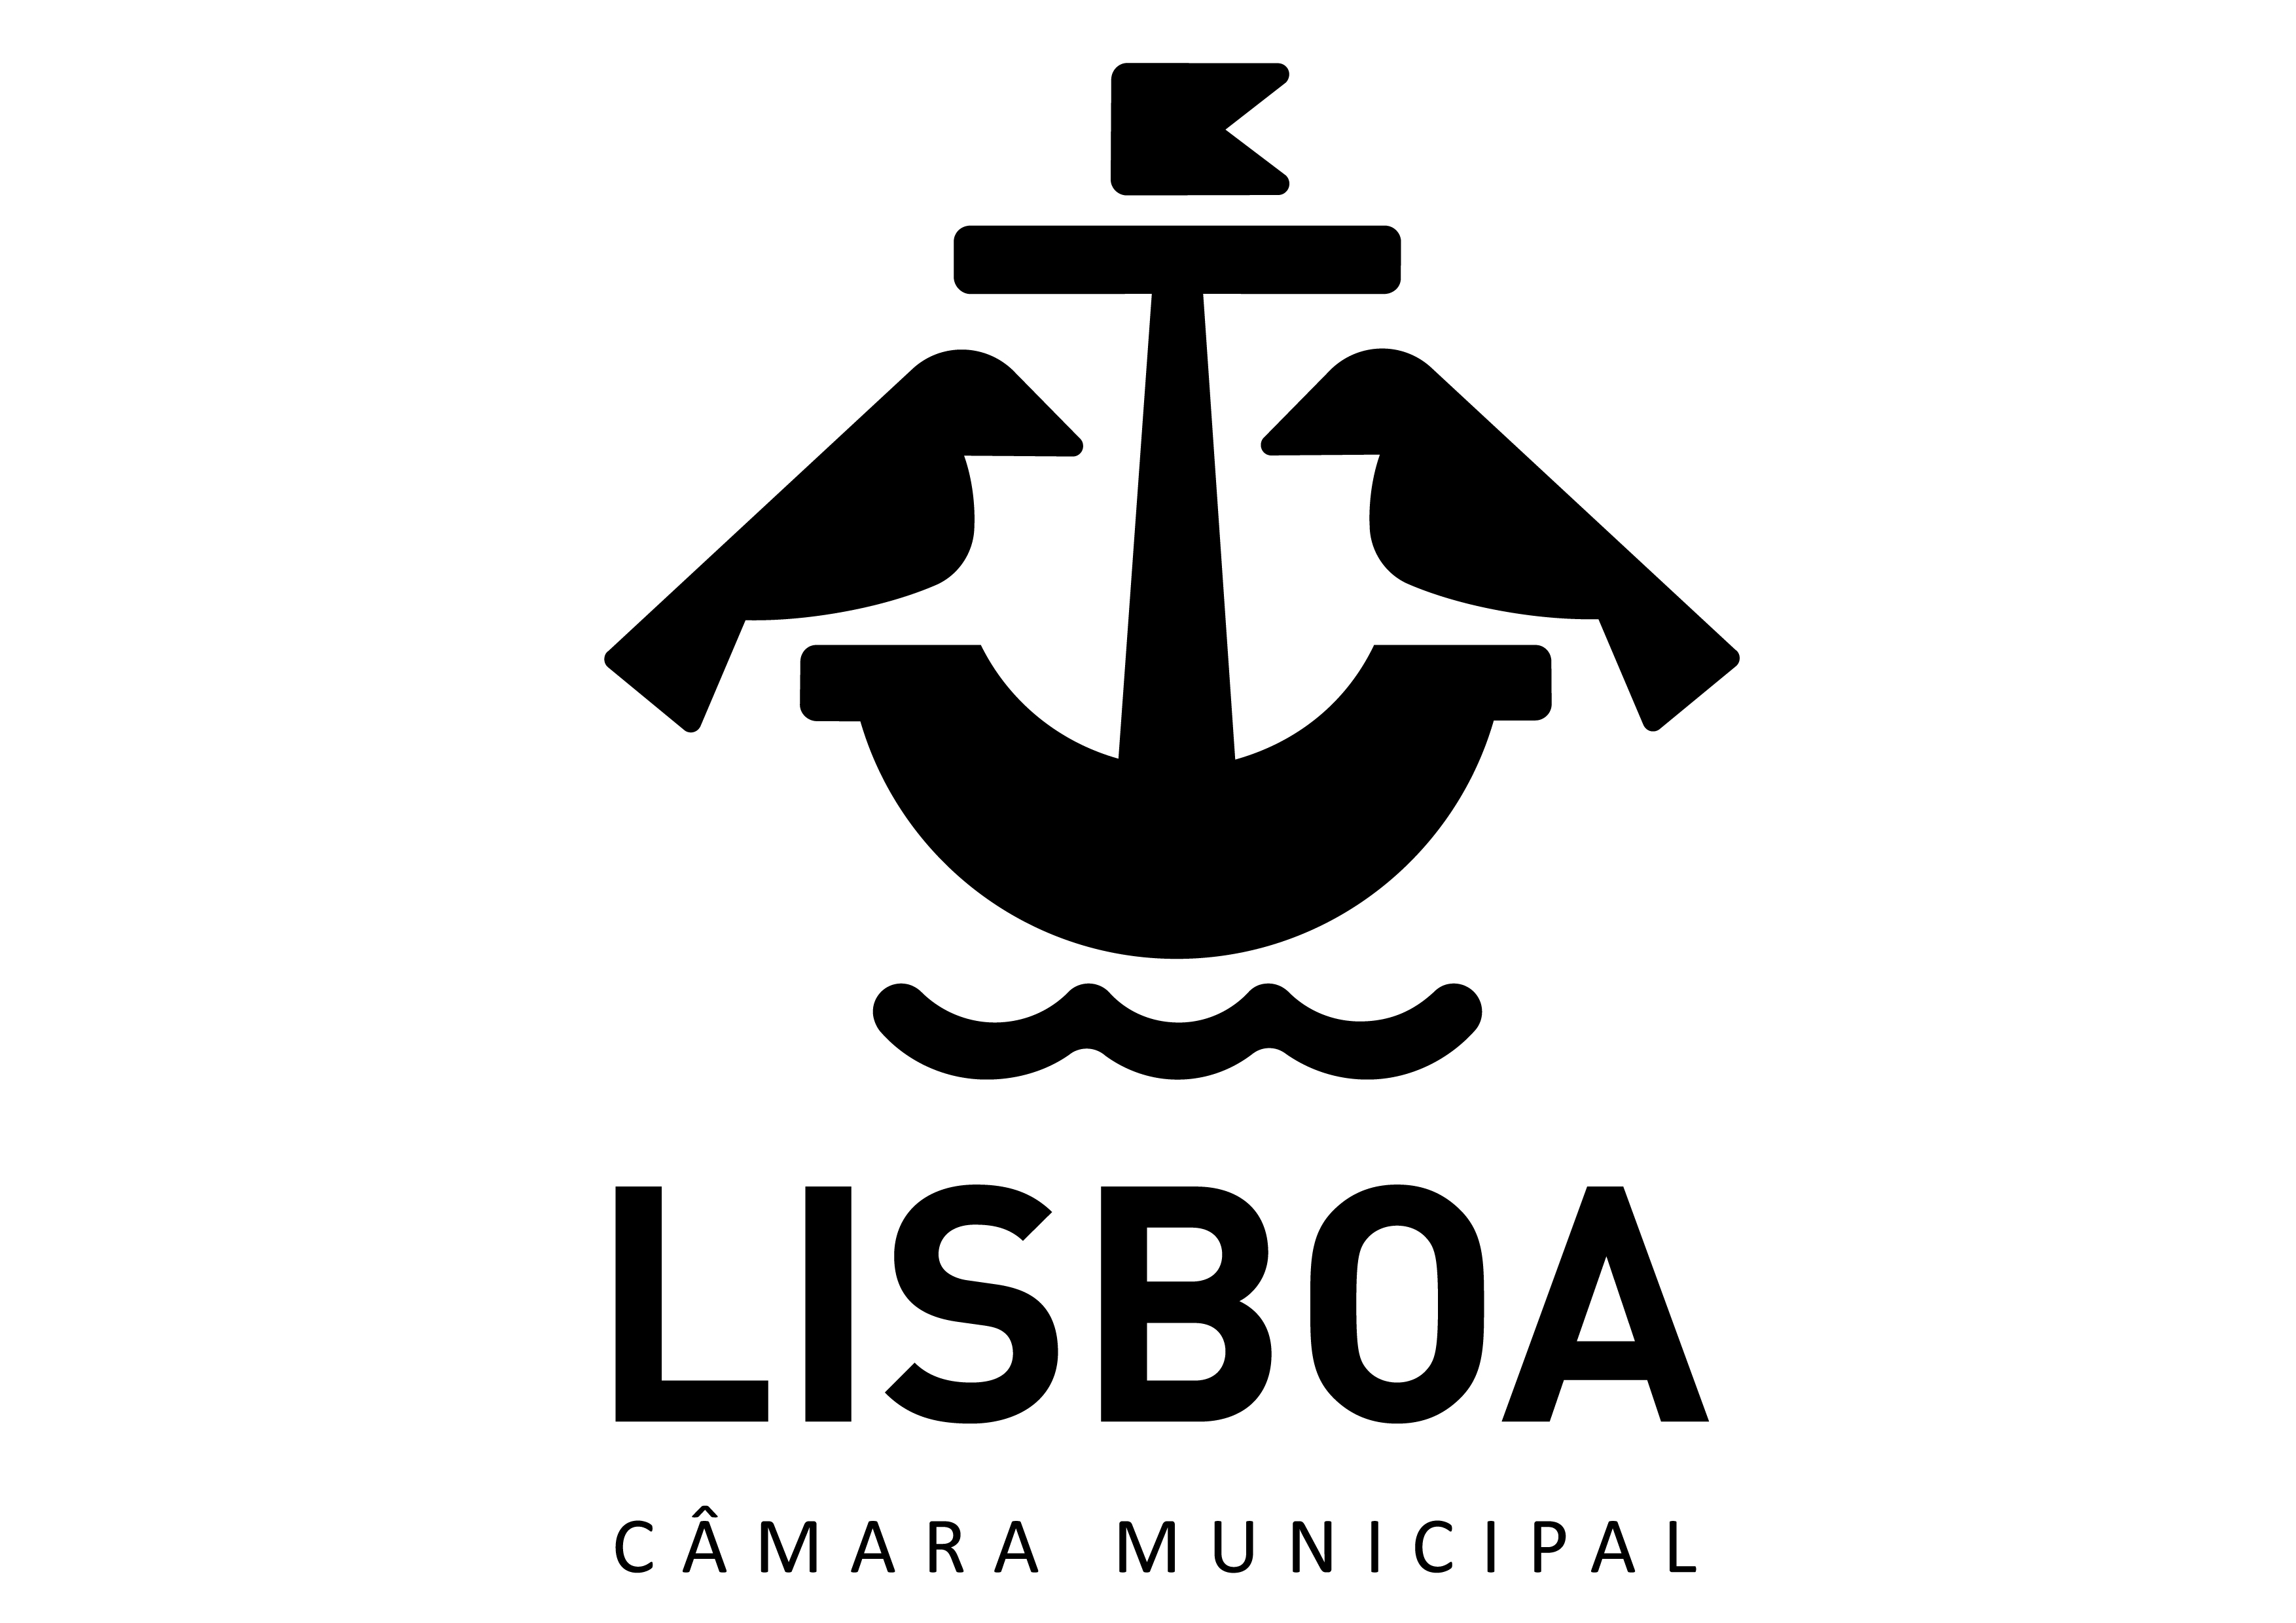 Camara Municipal de Lisboa Lisbon City Council